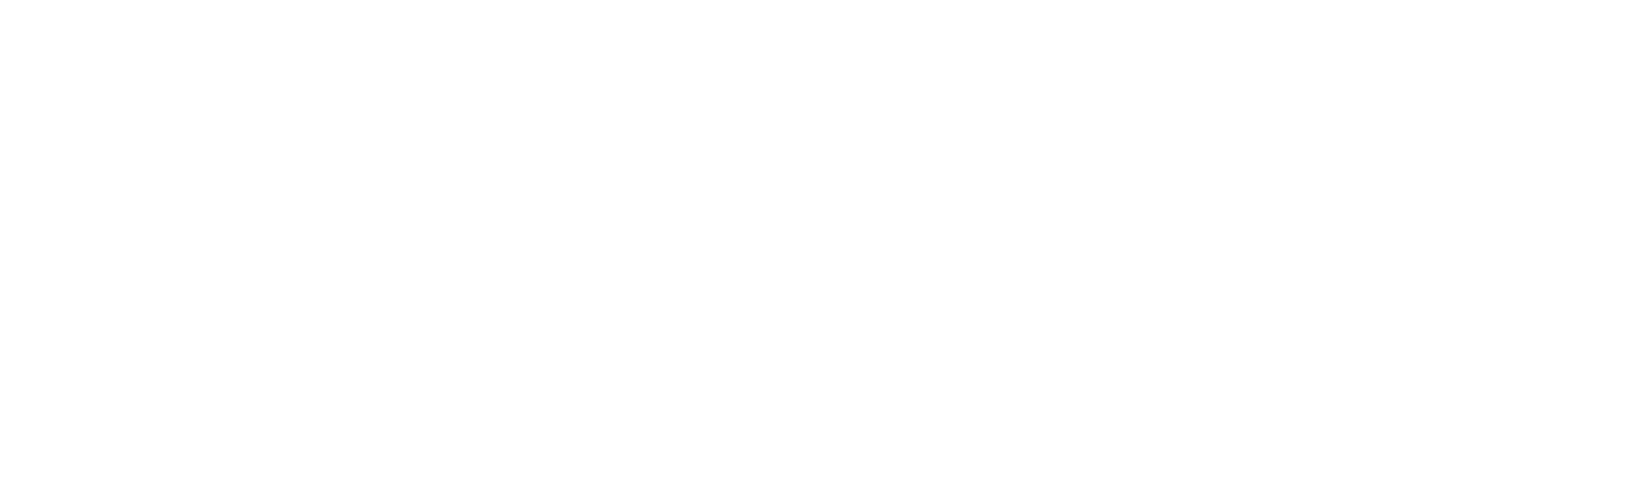 University of Kentucky Logo and link to uky.edu homepage